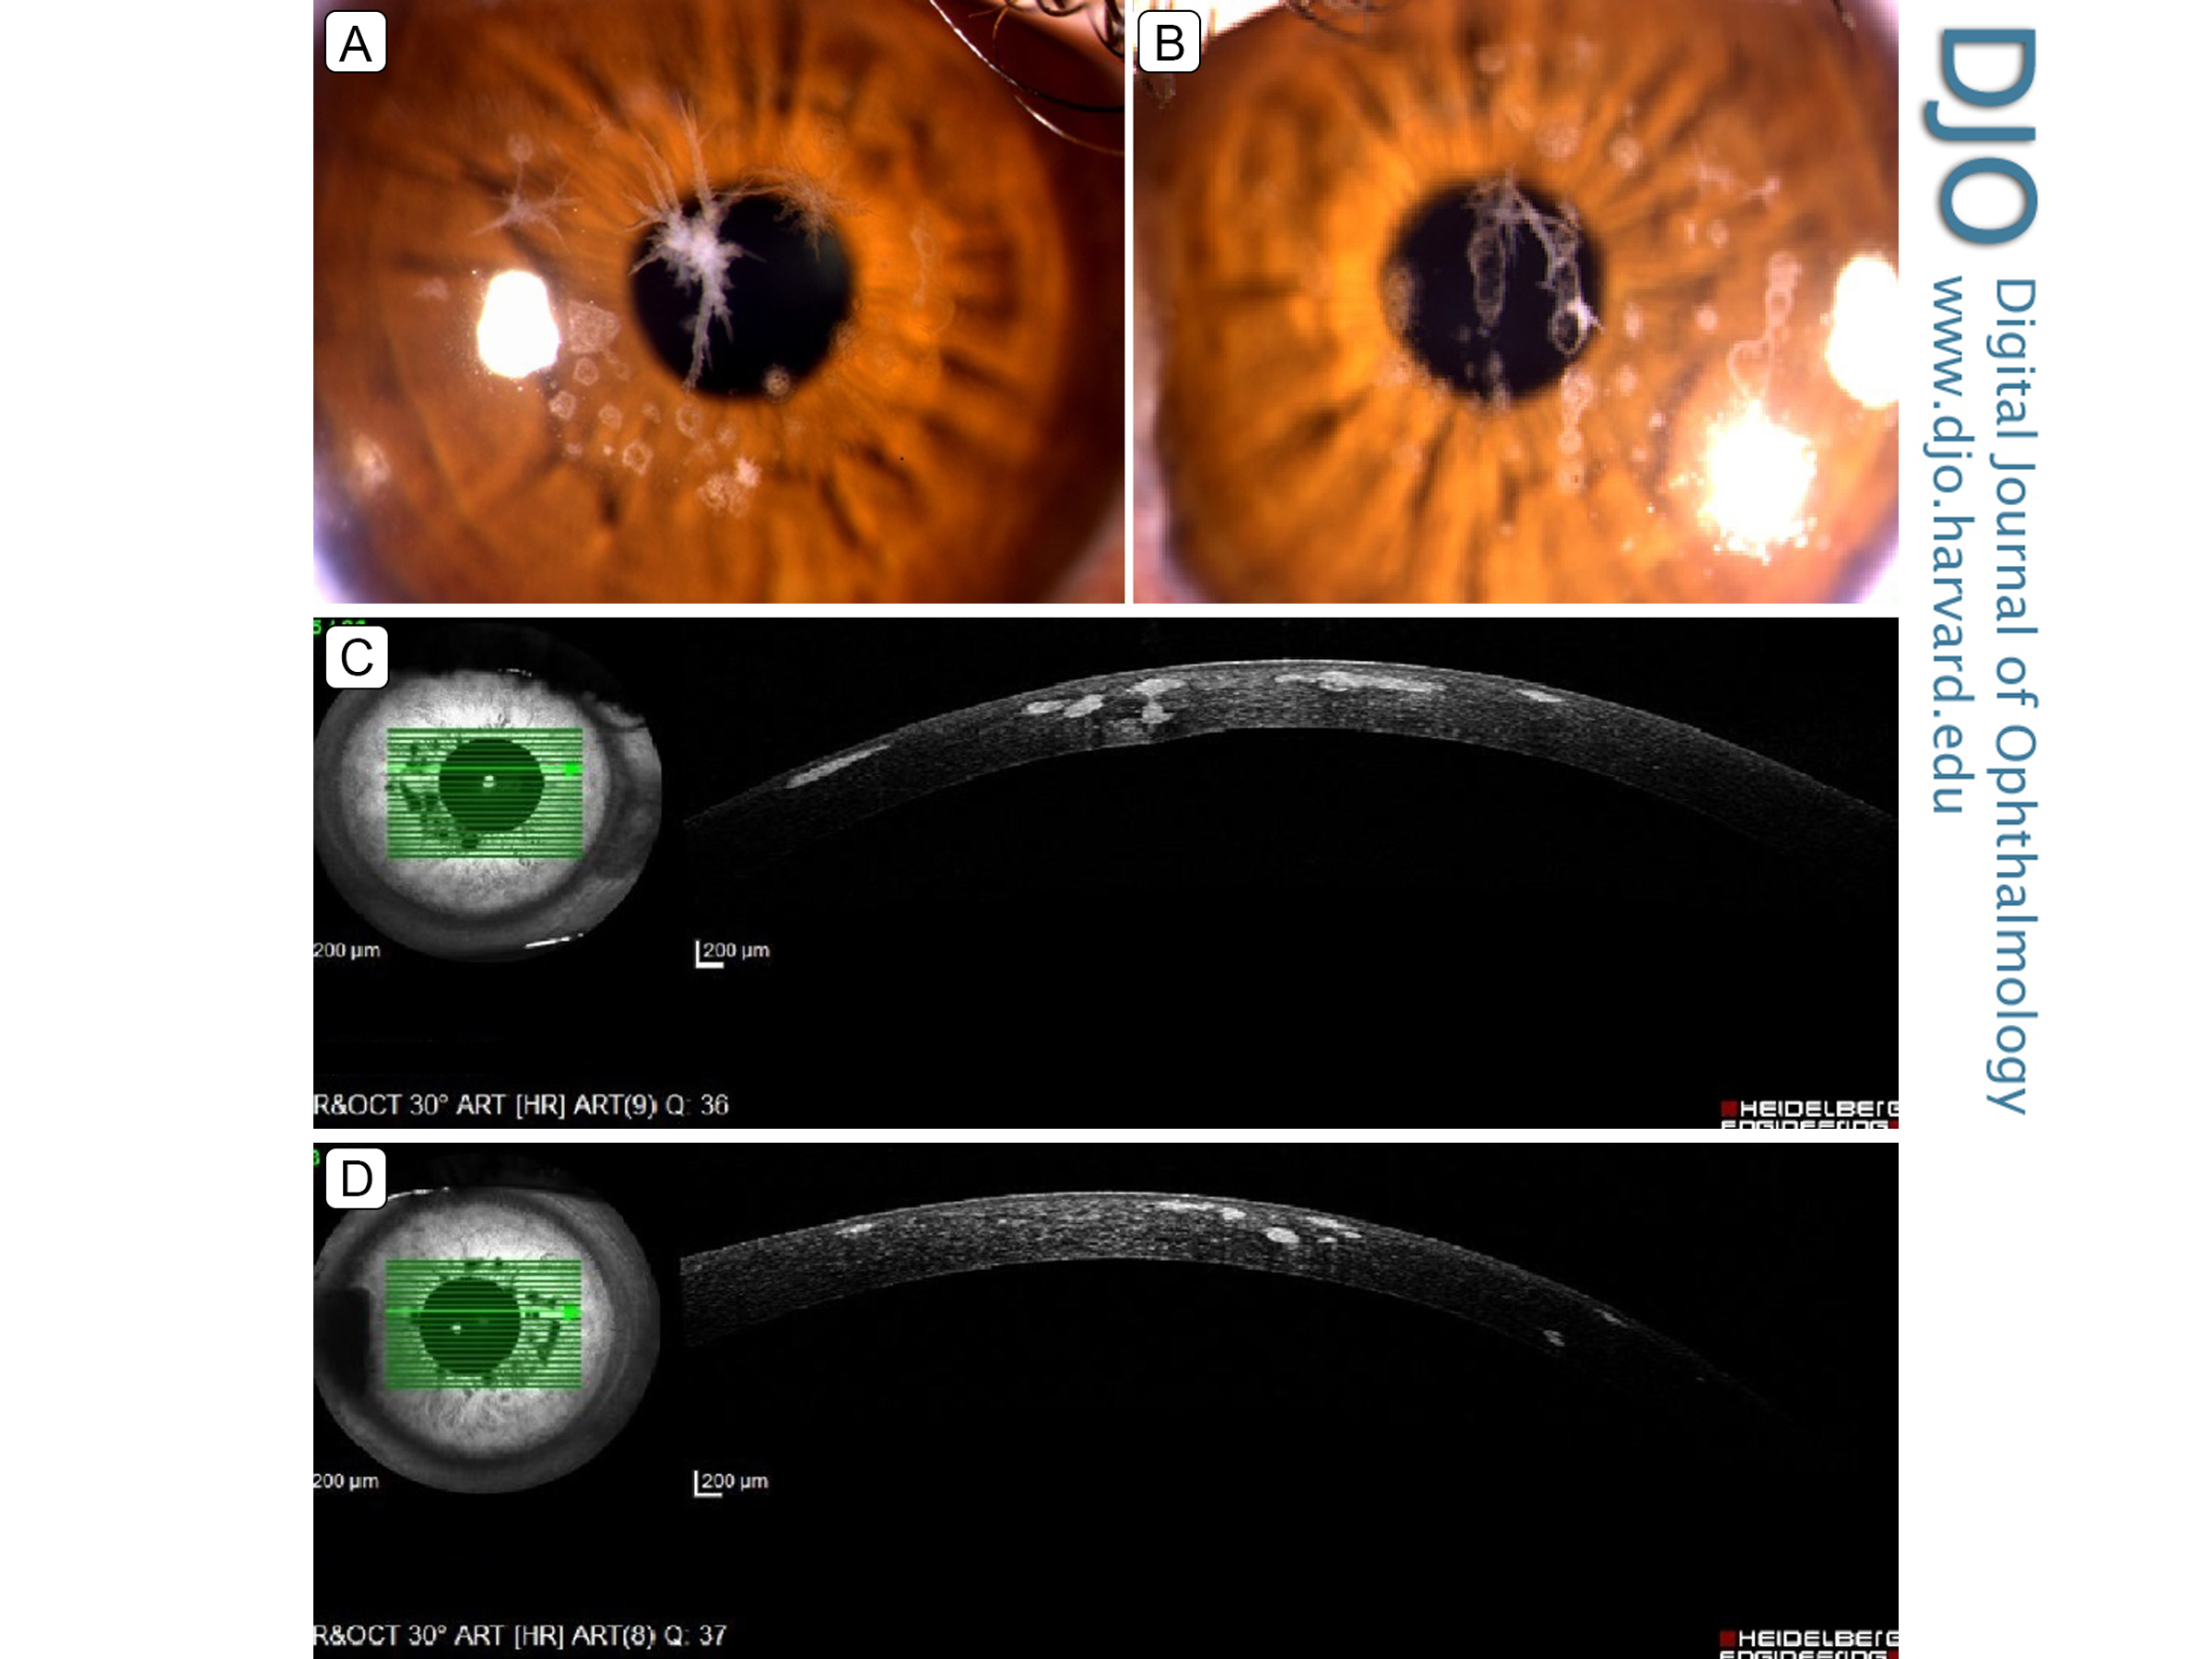 Avellino (combined granular-lattice corneal) dystrophy